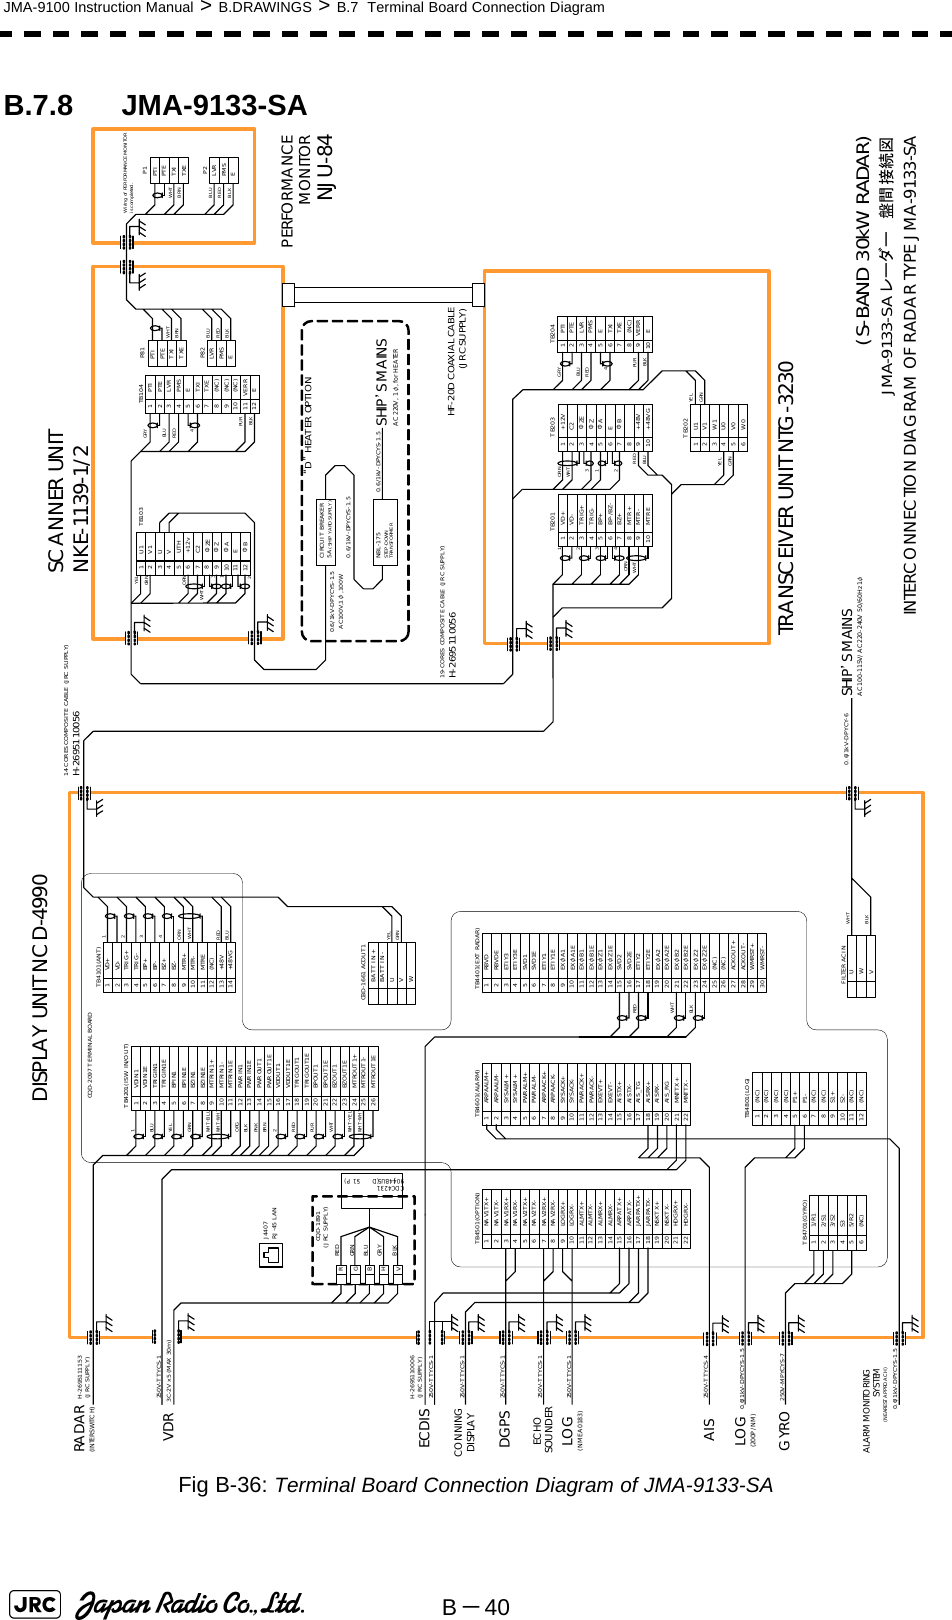 B－40JMA-9100 Instruction Manual &gt; B.DRAWINGS &gt; B.7  Terminal Board Connection DiagramB.7.8 JMA-9133-SAFig B-36: Terminal Board Connection Diagram of JMA-9133-SA 1VD+2VD-3TRIG+4TRIG-5BP+6BP-7BZ+8BZ-9MTR+10 MTR-11 MTRE12 (NC)13 +48 V14 +48 VGTB4101(ANT)1NA V1 TX+2NA V1 TX-3NA V1 RX+4NA V1 RX-5NA V2 TX+6NA V2 TX-7NA V2 RX+8NA V2 RX-9LO G RX +10 LO G RX -11 ALMTX+12 ALMTX-13 ALMRX+14 ALMRX-15 ARPAT X+16 ARPAT X-17 JAR PA TX+18 JAR PA TX-19 NSKT X+20 NSKT X-21 HDG RX+22 HDG RX-TB4501(OPTION) 1ARPAALM+2ARPAALM-3SYSALM+4SYSALM+5PWRALM+6PWRALM-7ARPAAC K+8ARPAAC K-9SYSACK+10 SYSACK-11 PWRACK+12 PWRACK-13 EXEVT+14 EXEVT-15 AISTX+16 AISTX-17 AIS_TG18 AISRX+19 AISRX-20 AIS_RG21 MNTTX+22 MNTTX-TB4601(ALARM) TB4401(EXT RADAR)1RBVD2RBVDE3ETIY34ETIY3E5SVD16SVD1E7ETIY18ETIY1E9EXφA110 EXφA1E11 EXφB112 EXφB1E13 EXφZ114 EXφZ1E1516171819202122232425 (NC)26 (NC)27 ACKOUT+28 ACKOUT-29 WMRST+30 WMRST-SVD2SVD2EETIY2ETIY2EEXφA2EXφA2EEXφB2EXφB2EEXφZ2EXφZ2E1(NC)2345P1+6P1-789S1+10 S2-1112TB4801(LOG)(NC)(NC)(NC)(NC)(NC)(NC)(NC) UWVFILTER ACINCDC-1324J4409(DSUB-15P)RCQD-1891(JRC SUPPLY)GBHVREDGRNBLUGR YBLK11/R122/S133/S24S355/R26(NC)TB4701(GYRO)PTIPTETXITXELVRPMSEP82P81PTIPTETXITXELVRPMSEP2P1SCANNER UNITNKE-1139-1/2PERFORMANCEMONITORNJU-84DISPLAY UNIT NCD-4990BLU1YE LGRNWHT-B LUWHT-WH TORGBLKPNKBR N2REDPURWHT-YELWHT-WH TH-2695111153(JRC SUPPLY)1VDIN12VDIN1E3TRIGIN14TRIGIN1E5BPIN16BPIN1E7BZIN18BZIN1E9MTRIN1+10 MTRIN1-11 MTRIN1E12 PWRIN113 PWRIN1E14 PWROUT115 PWROUT1E16 VDOUT117 VDOUT1E18 TRIGOUT119 TRIGOUT1E20 BPOUT121 BPOUT1E22 BZOUT123 BZOUT1E24 MTROUT1+25 MTROUT1-26 MTROUT1ETB4201(ISW IN/OUT)RADAR(INTERSWITC H)WHTREDWH TBLKECDISH-2695110006(JRC SUPPLY)250V-TTYCS-1250V-TTYCS-1CONNINGDISPLAYVDR3C-2V x5 (MAX 30m)250V-TTYCS-1250V-TTYCS-1250V-TTYCS-1250V-TTYCS-1DGPSECHO SOUNDERLOG(NMEA0183)250V-TTYCS-4AIS0.6/1kV-DPYCYS-1.5250V-MPYCYS-7GYROLOG(200P /NM)0.6/1kV-DPYCYS-1.5ALARM MONITORINGSYSTEM(NEAREST APPROACH)REDBLU3ORN WHT0.6/1kV-DPYCY-6SHIP’S MAINSAC100-115V/AC220-240V 50/60Hz 1φ(S-BAND 30kW RADAR)JMA-9133-SA レーダー 盤間接続図INTERCONNECTION DIAGRAM OF RADAR TYPE JMA-9133-SAWHTBLKWHTBRNBLUREDBLKWHTBRNBLUREDBLK14-C ORES COMPOSITE CABLE (JRC SUPPLY)H-2695110056CQD-2097 T ERMINAL  BOARD124YELGRNCIRCUIT BREAKER5A ( SHIP  YA RD SU PPLY )0.6/1kV-DPYCYS-1.5AC100V,1φ,100WNBL -175STEP -DO WN  TRA NSFO RME R0.6/1kV-DPYCYS-1.50.6/1kV-DPYCYS-1.5SHIP’S MAINSAC 220V , 1φ,for HEATER“D” HEATER OPTIONPTIPTELVRPMS(NC)ETB104TXITXE123456789101ΦB23C24ΦZE5U16V17UTH8+12v9ΦZ10 ΦAETB103123V04W05U16V1W1U0TB2021GRNYE LHF-20D COAXIAL CABLE(JRC SUPPLY)19-CORES COMPOSITE CABLE (JRC SUPPLY)H-26951100561MTRE23BP+4BP-/BZ-5VD+6VD-7TRIG+8TRIG-9BZ+10MTR+MTR-TB201 123ΦA4E5+12V6C27ΦZE8ΦZ9ΦB10 +48V+48VGTB203 12345678910TB204PTIPTELVRPMS(NC)ETXITXEEVERR23GRNYE LREDBLU4ORNWHTORNWH T3124GRYBLUREDTRANSCEIVER UNIT NTG-32304GRYBLURED213WHTORNYE LGR NWiring  of  PERFOR MAN CE MONITORis completed.E1112 VER R(NC)(NC)UV1112PURBLKPURBLKJ4407RJ-45 LANUVWCBD-1661 ACOUT1BATT IN -BATT IN +